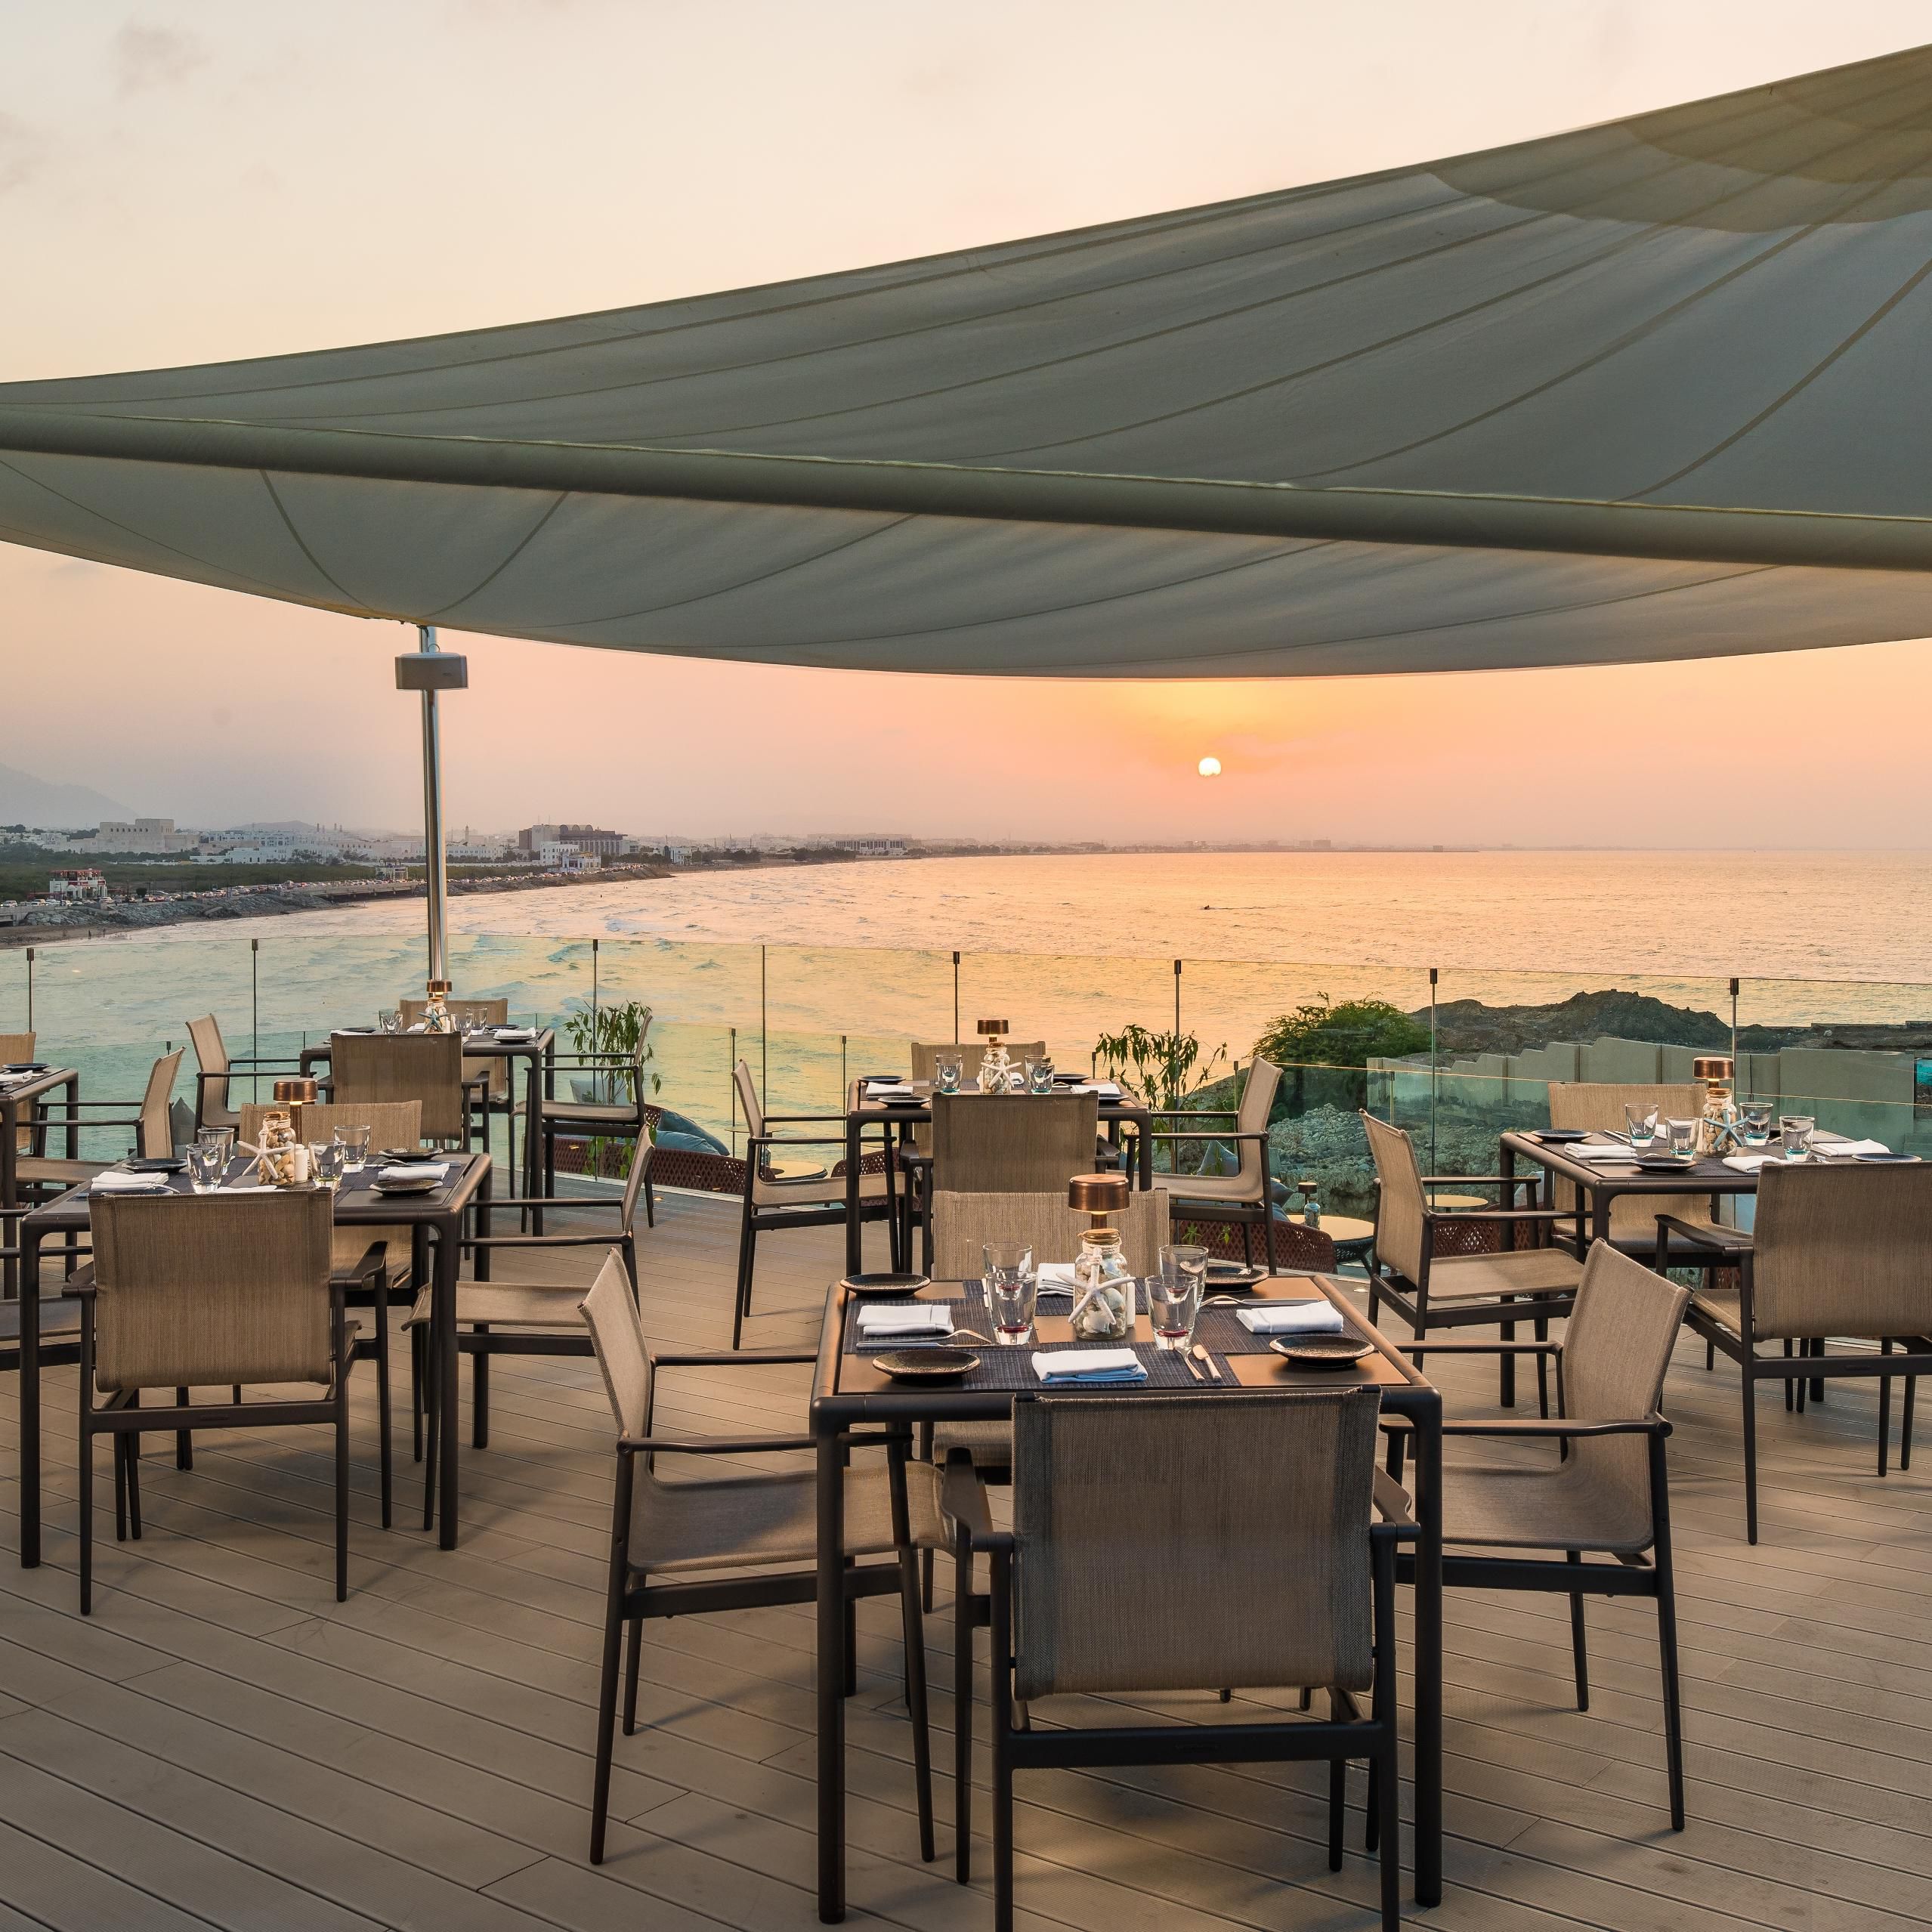 The Edge Restaurant Terrace with striking panoramic sunset views